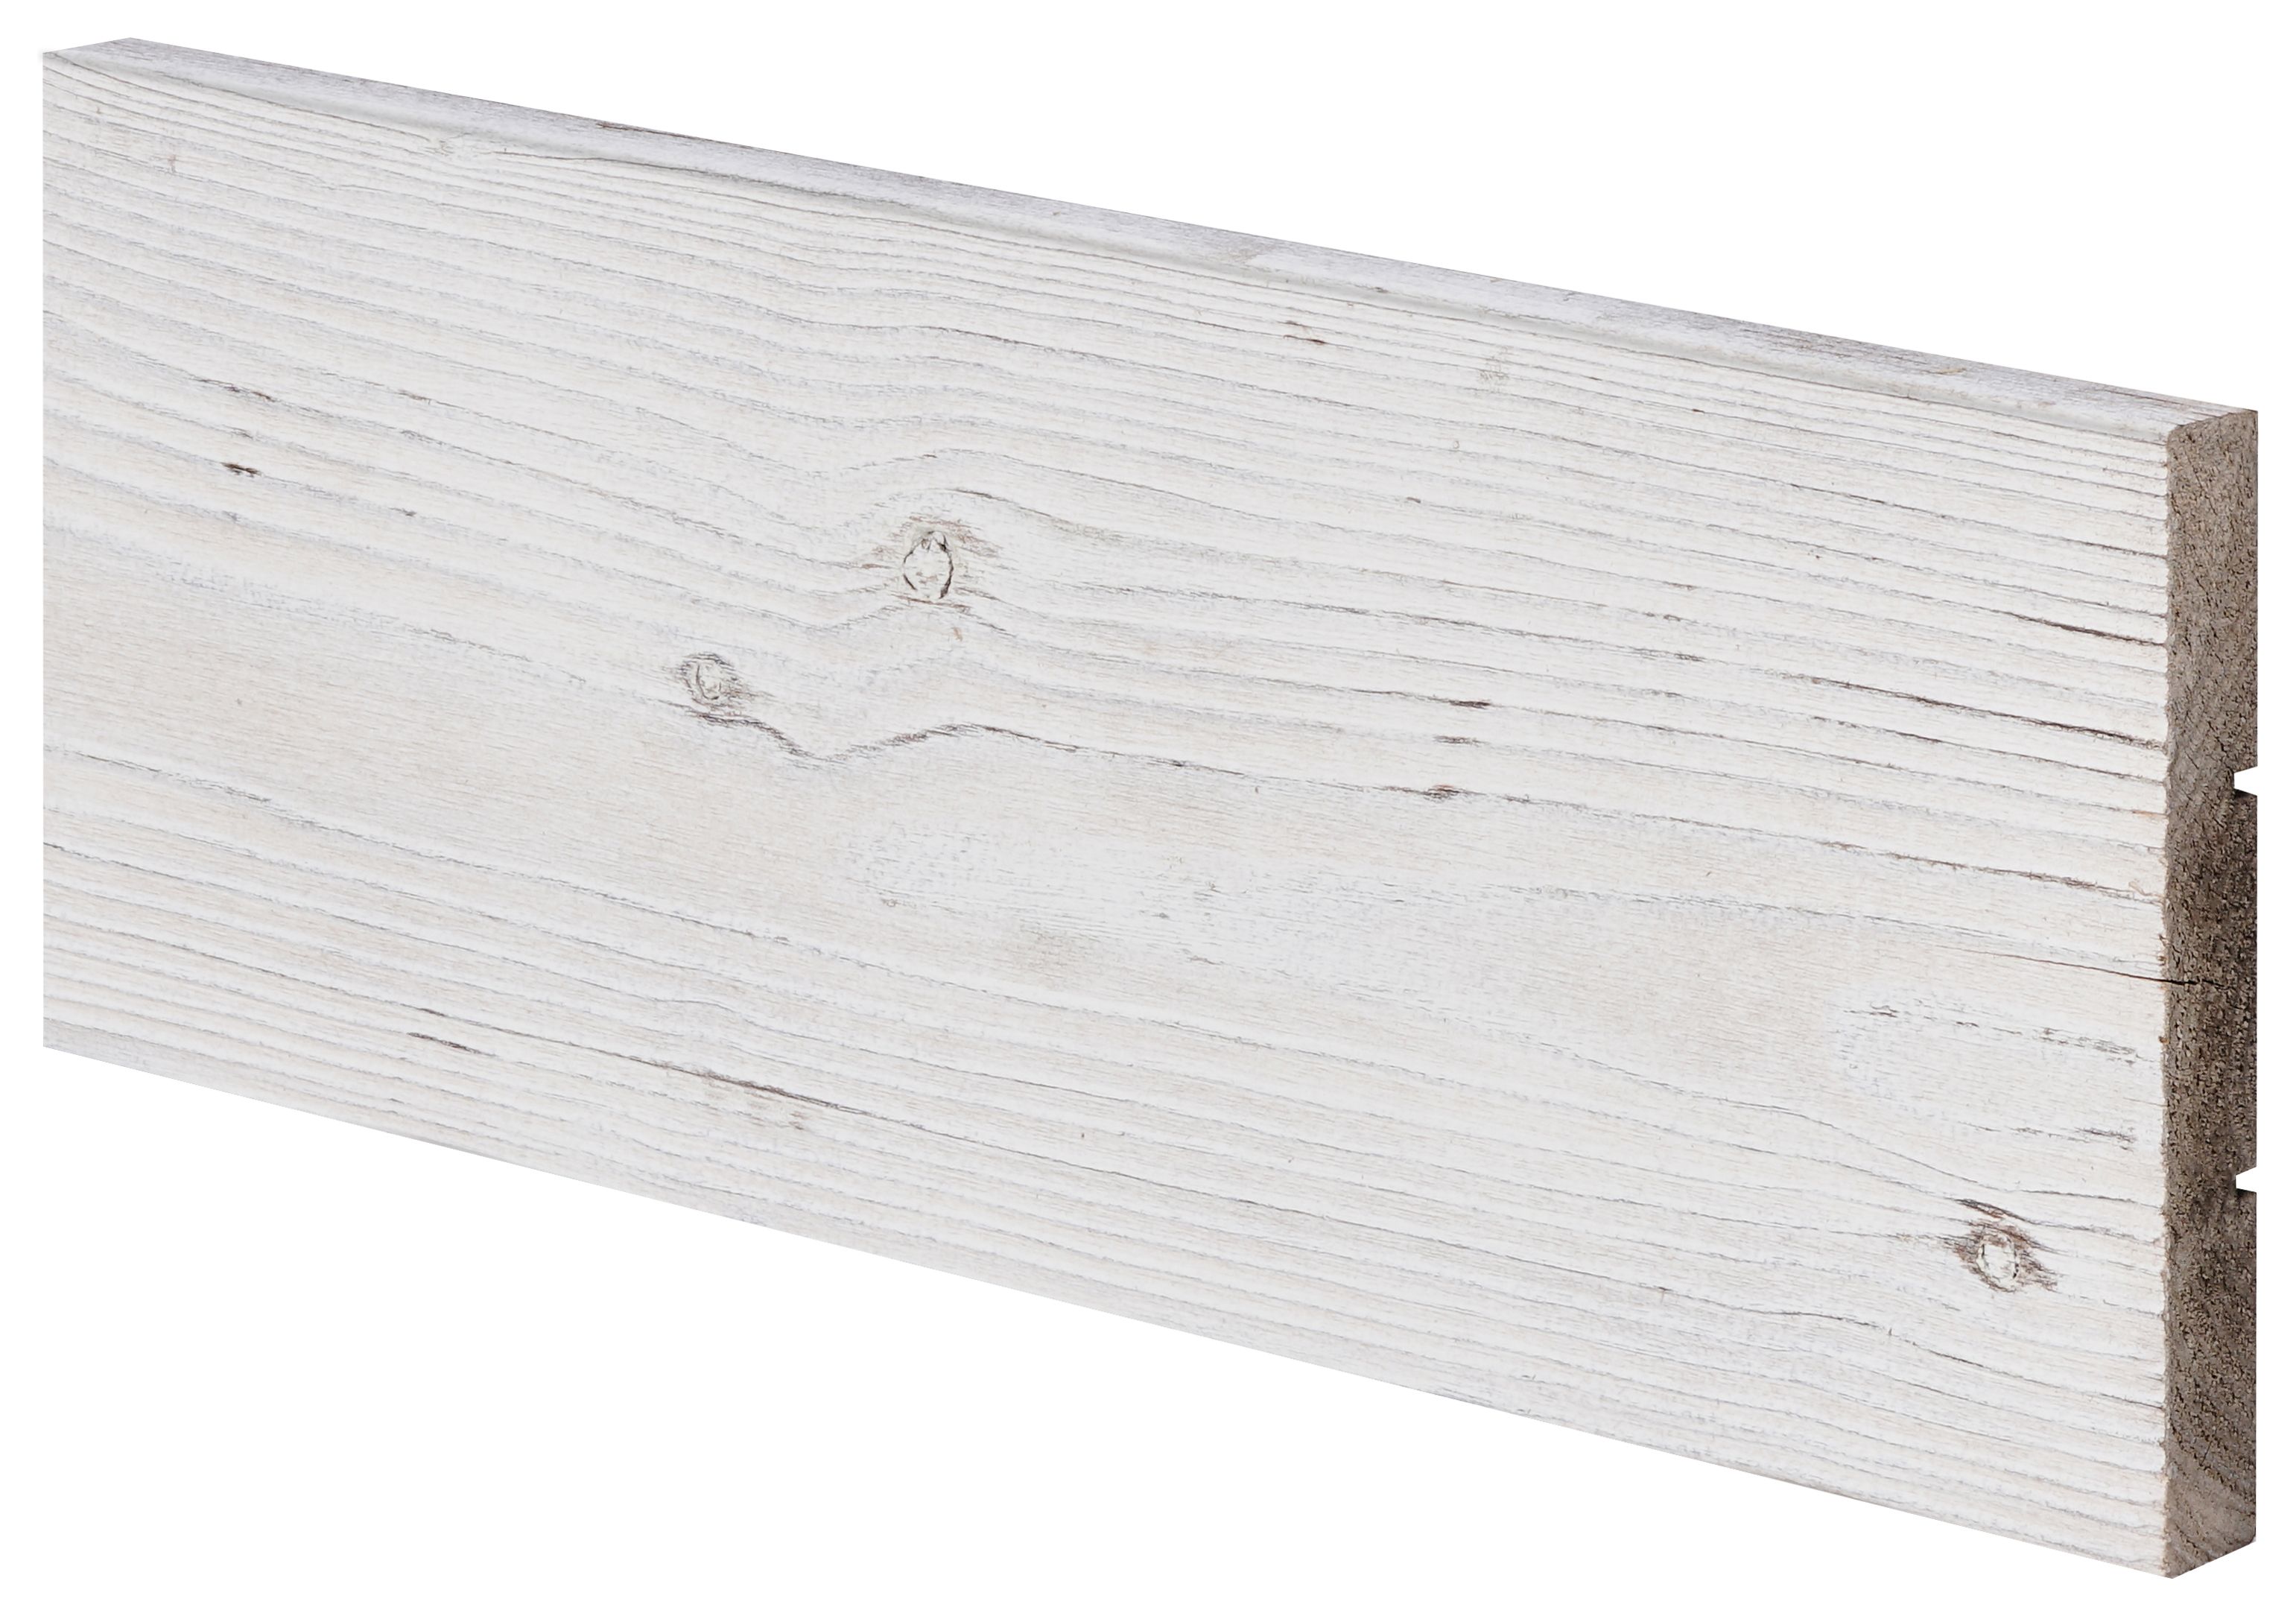 Image of IRO Internal Decorative Cladding - Driftwood White - 25mm x 150mm x 2400mm